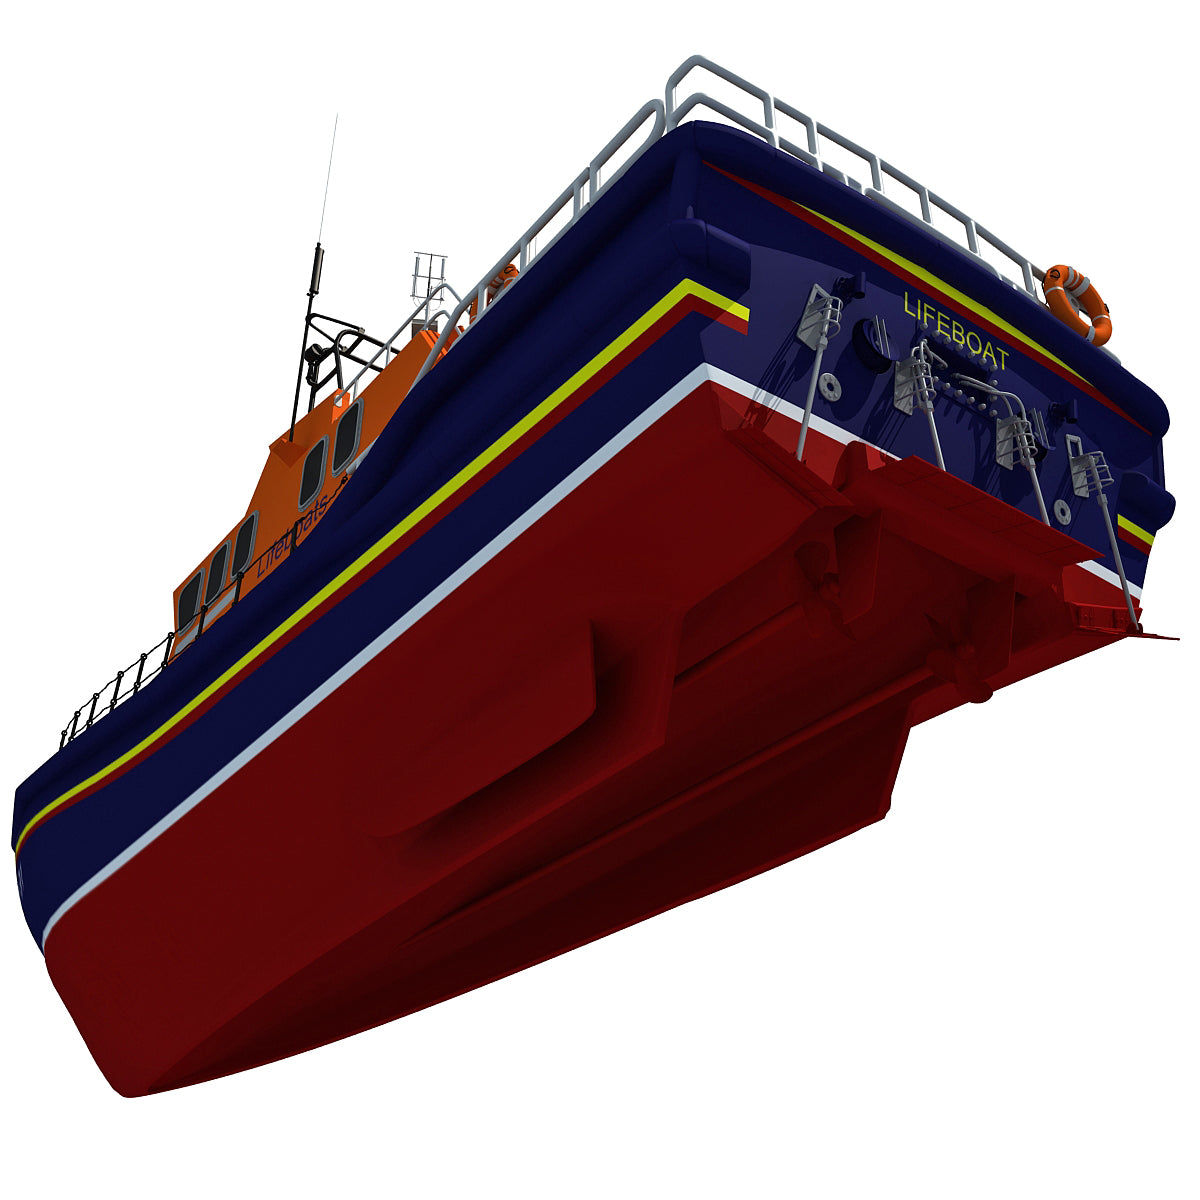 Lifeboat 3D Model